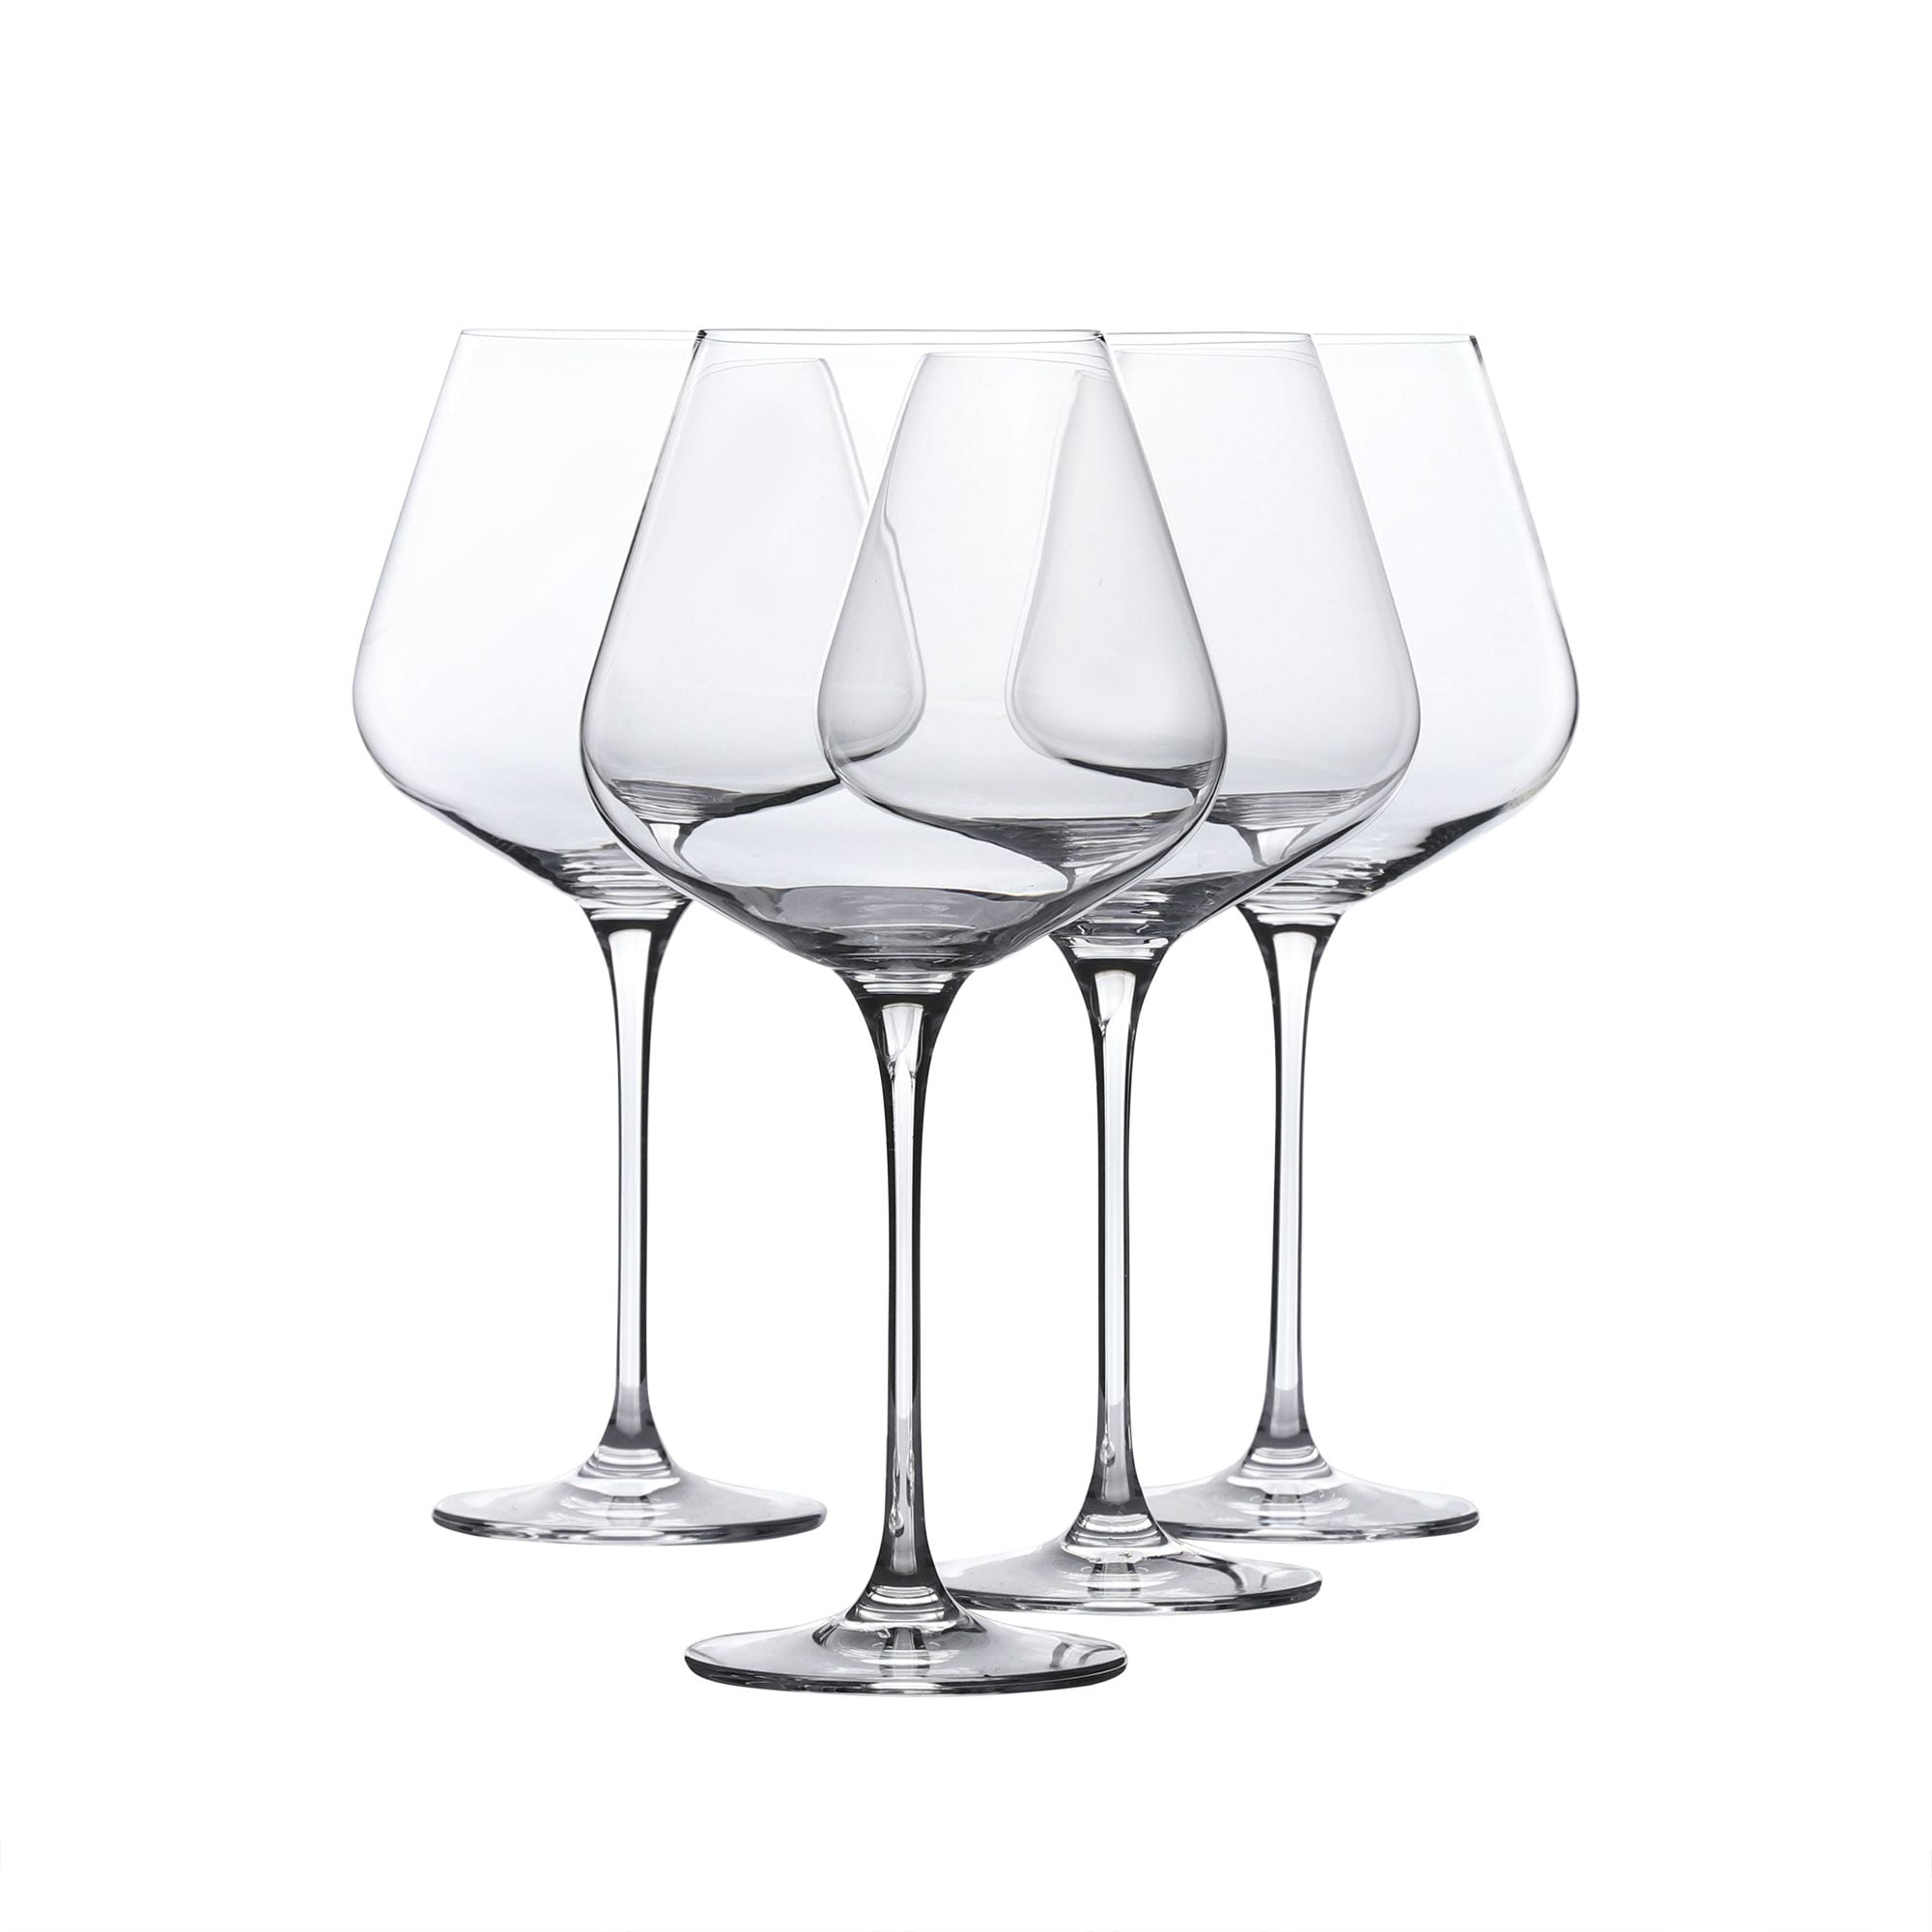 S SALIENT Wine Glasses Set of 6,Long Stem White/Red Wine glasses,14oz Hand  Blown Premium Crystal Win…See more S SALIENT Wine Glasses Set of 6,Long